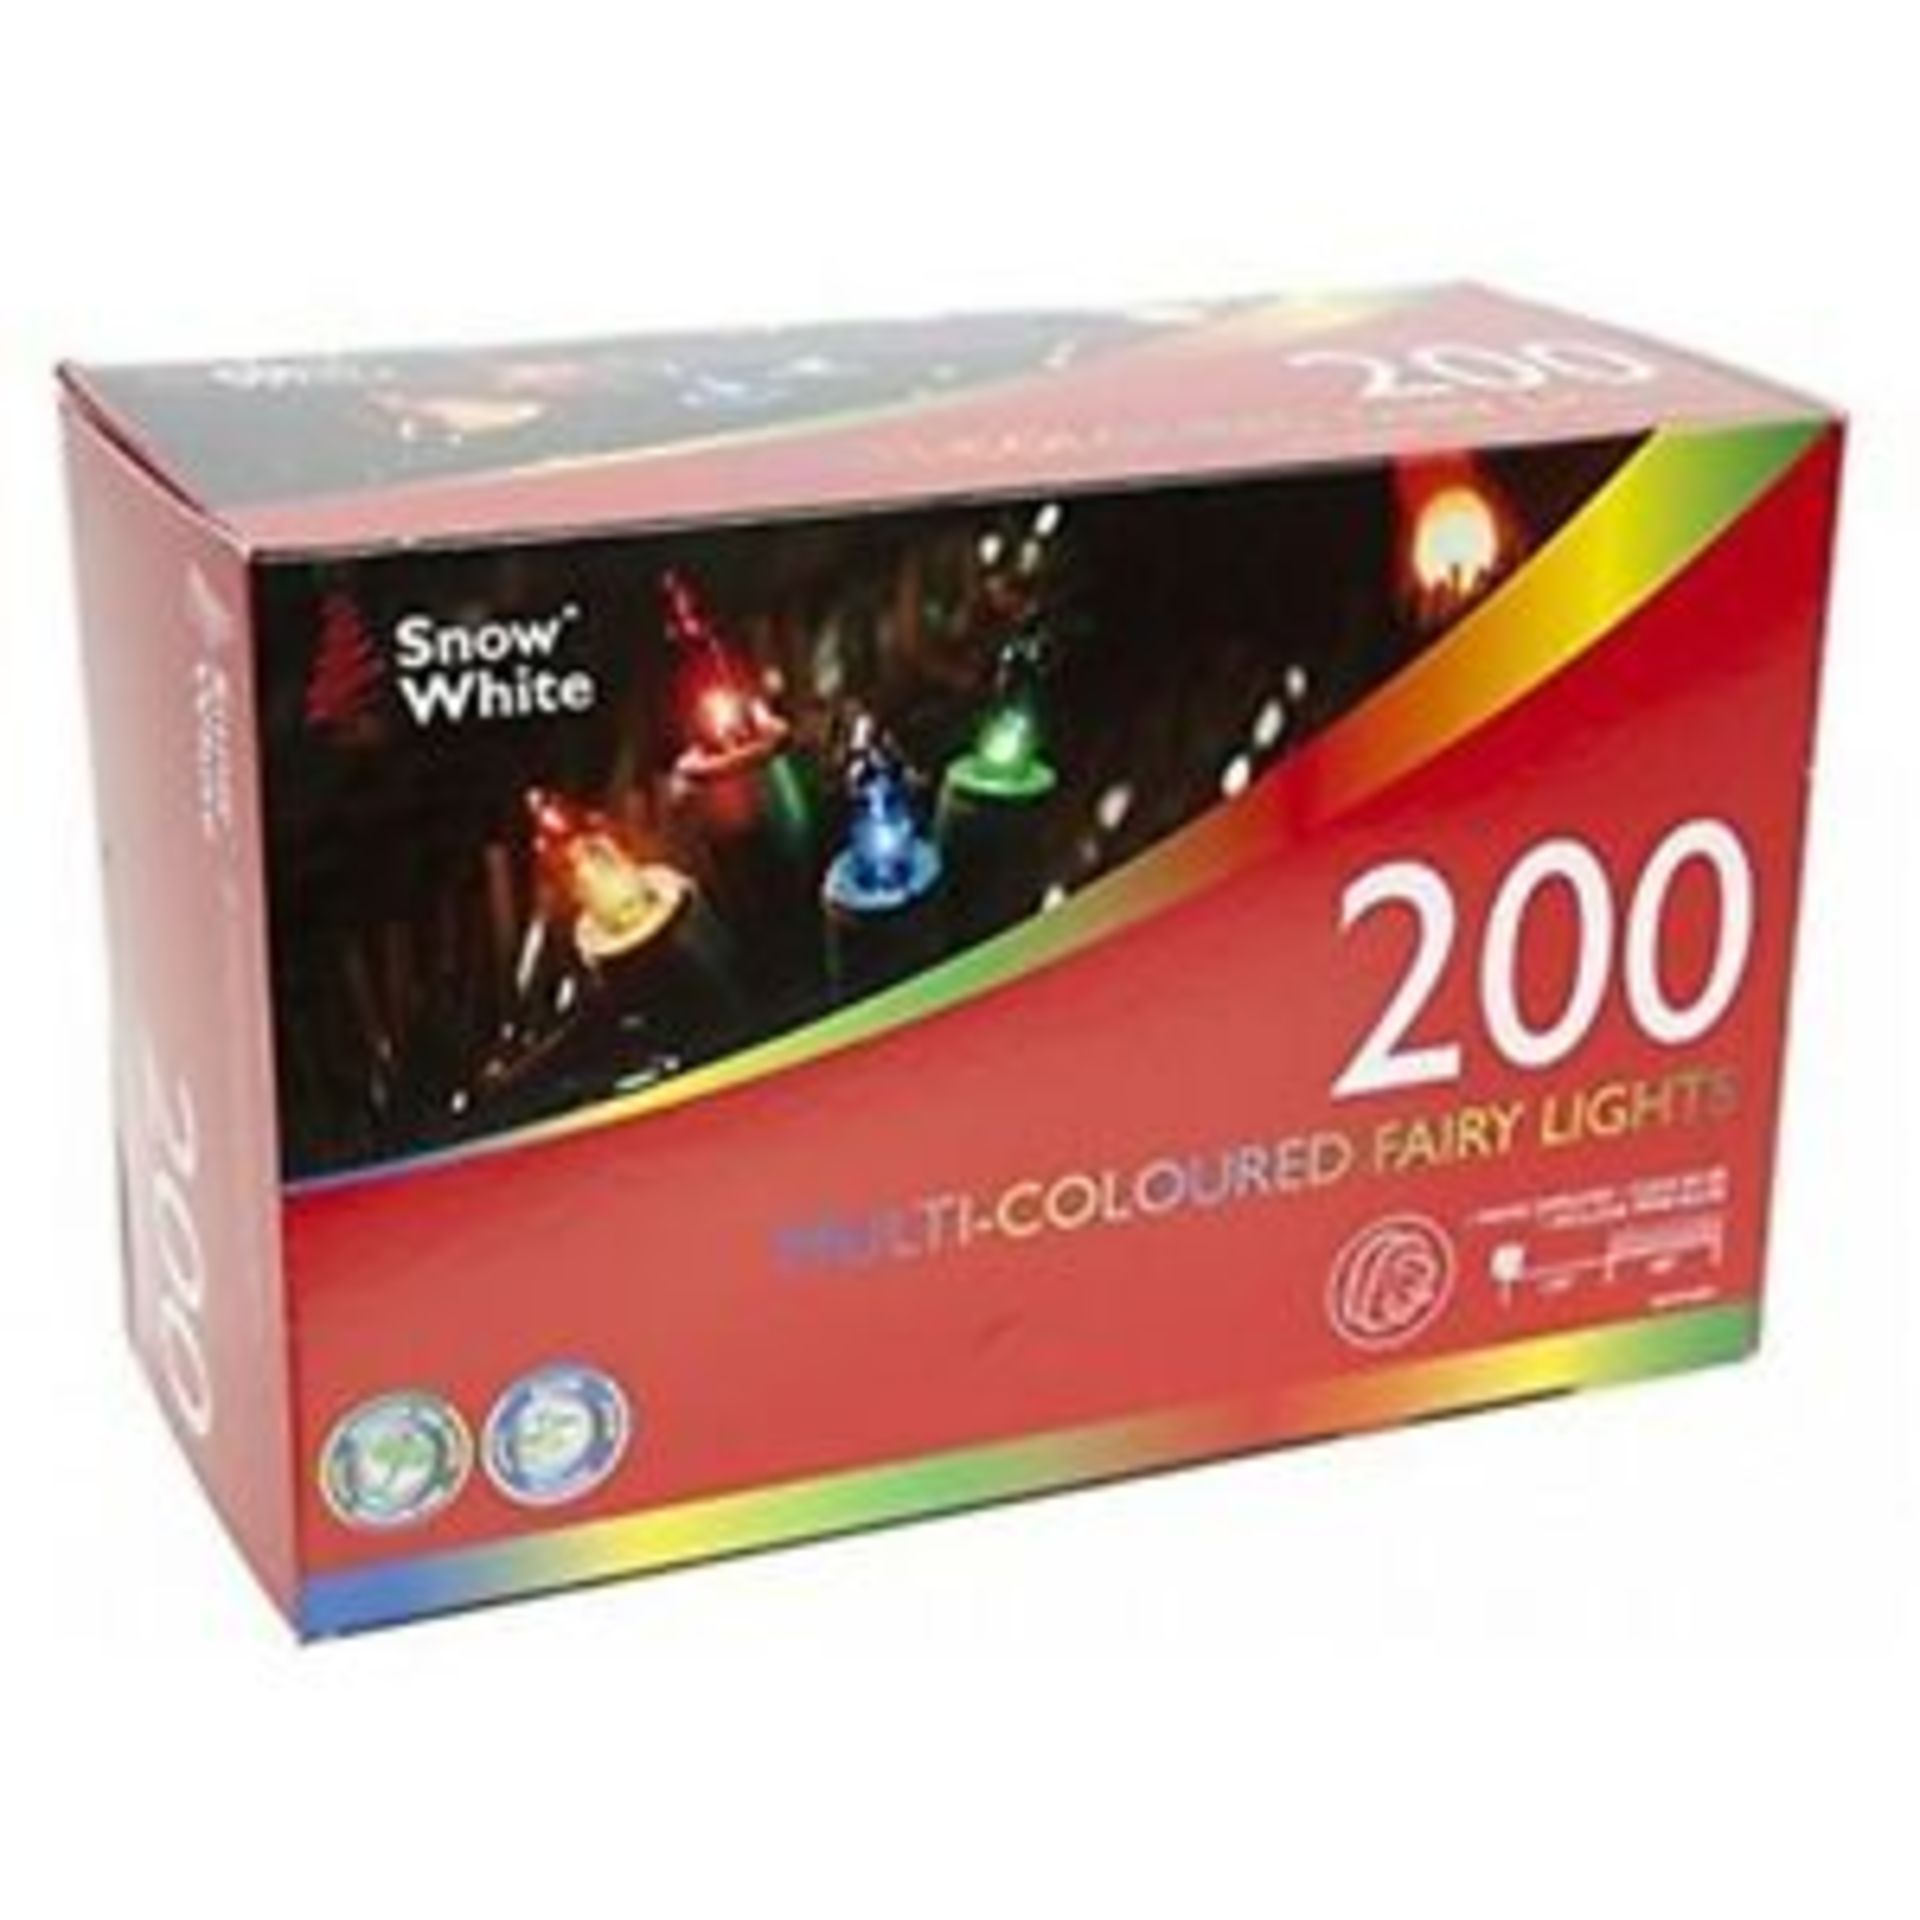 V Brand New 200 Multi coloured Fairy Lights - Indoor Use